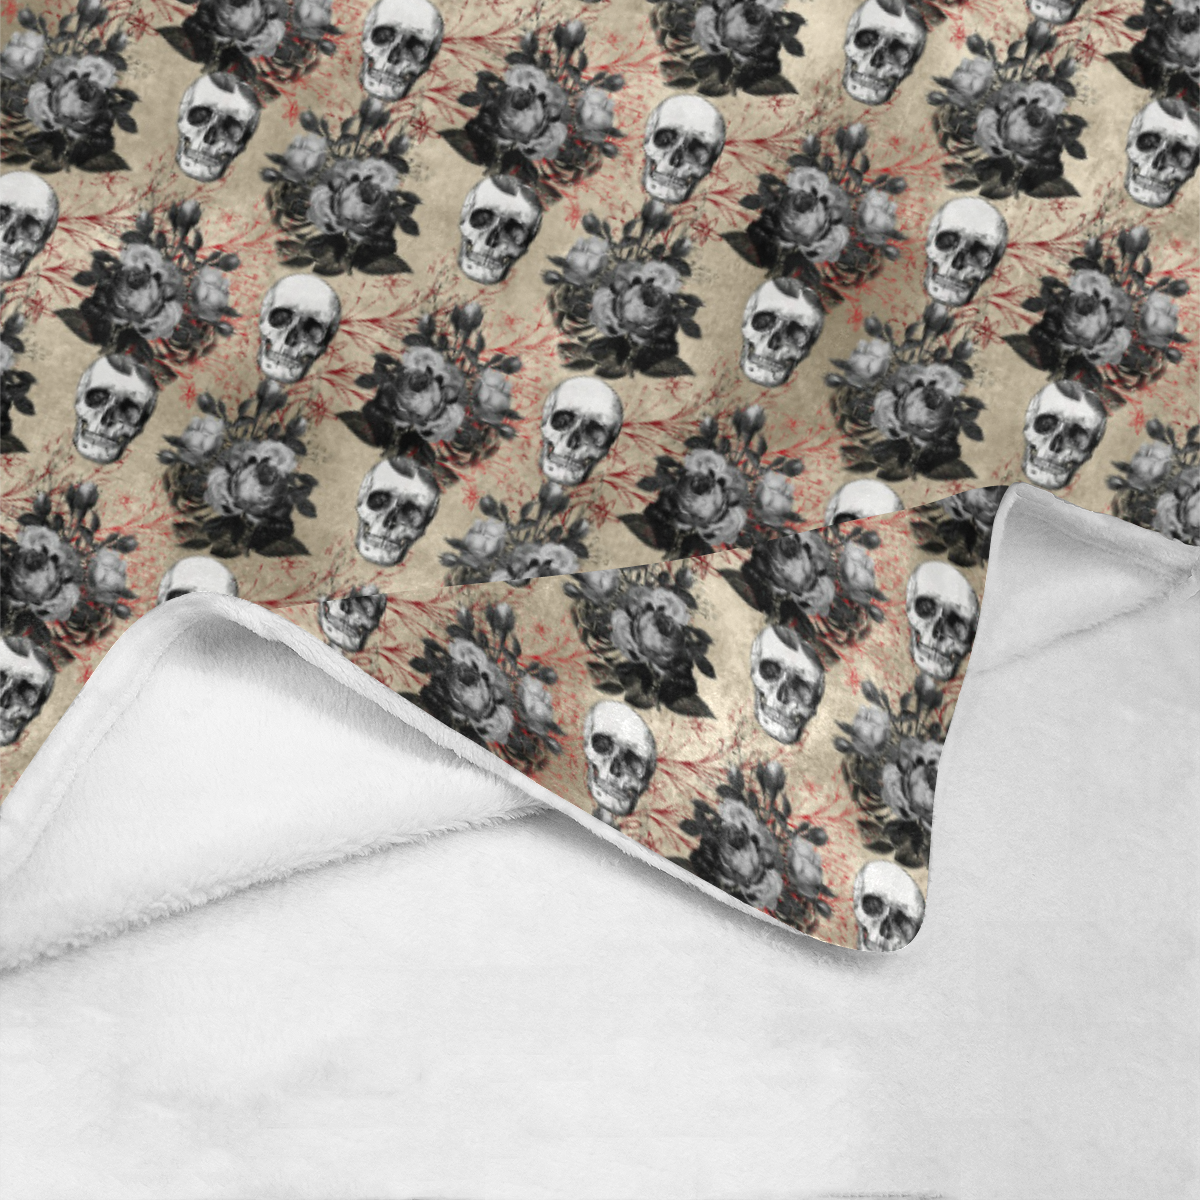 Gothic Skull with Dark Roses Ultra-Soft Micro Fleece Blanket 40"x50"